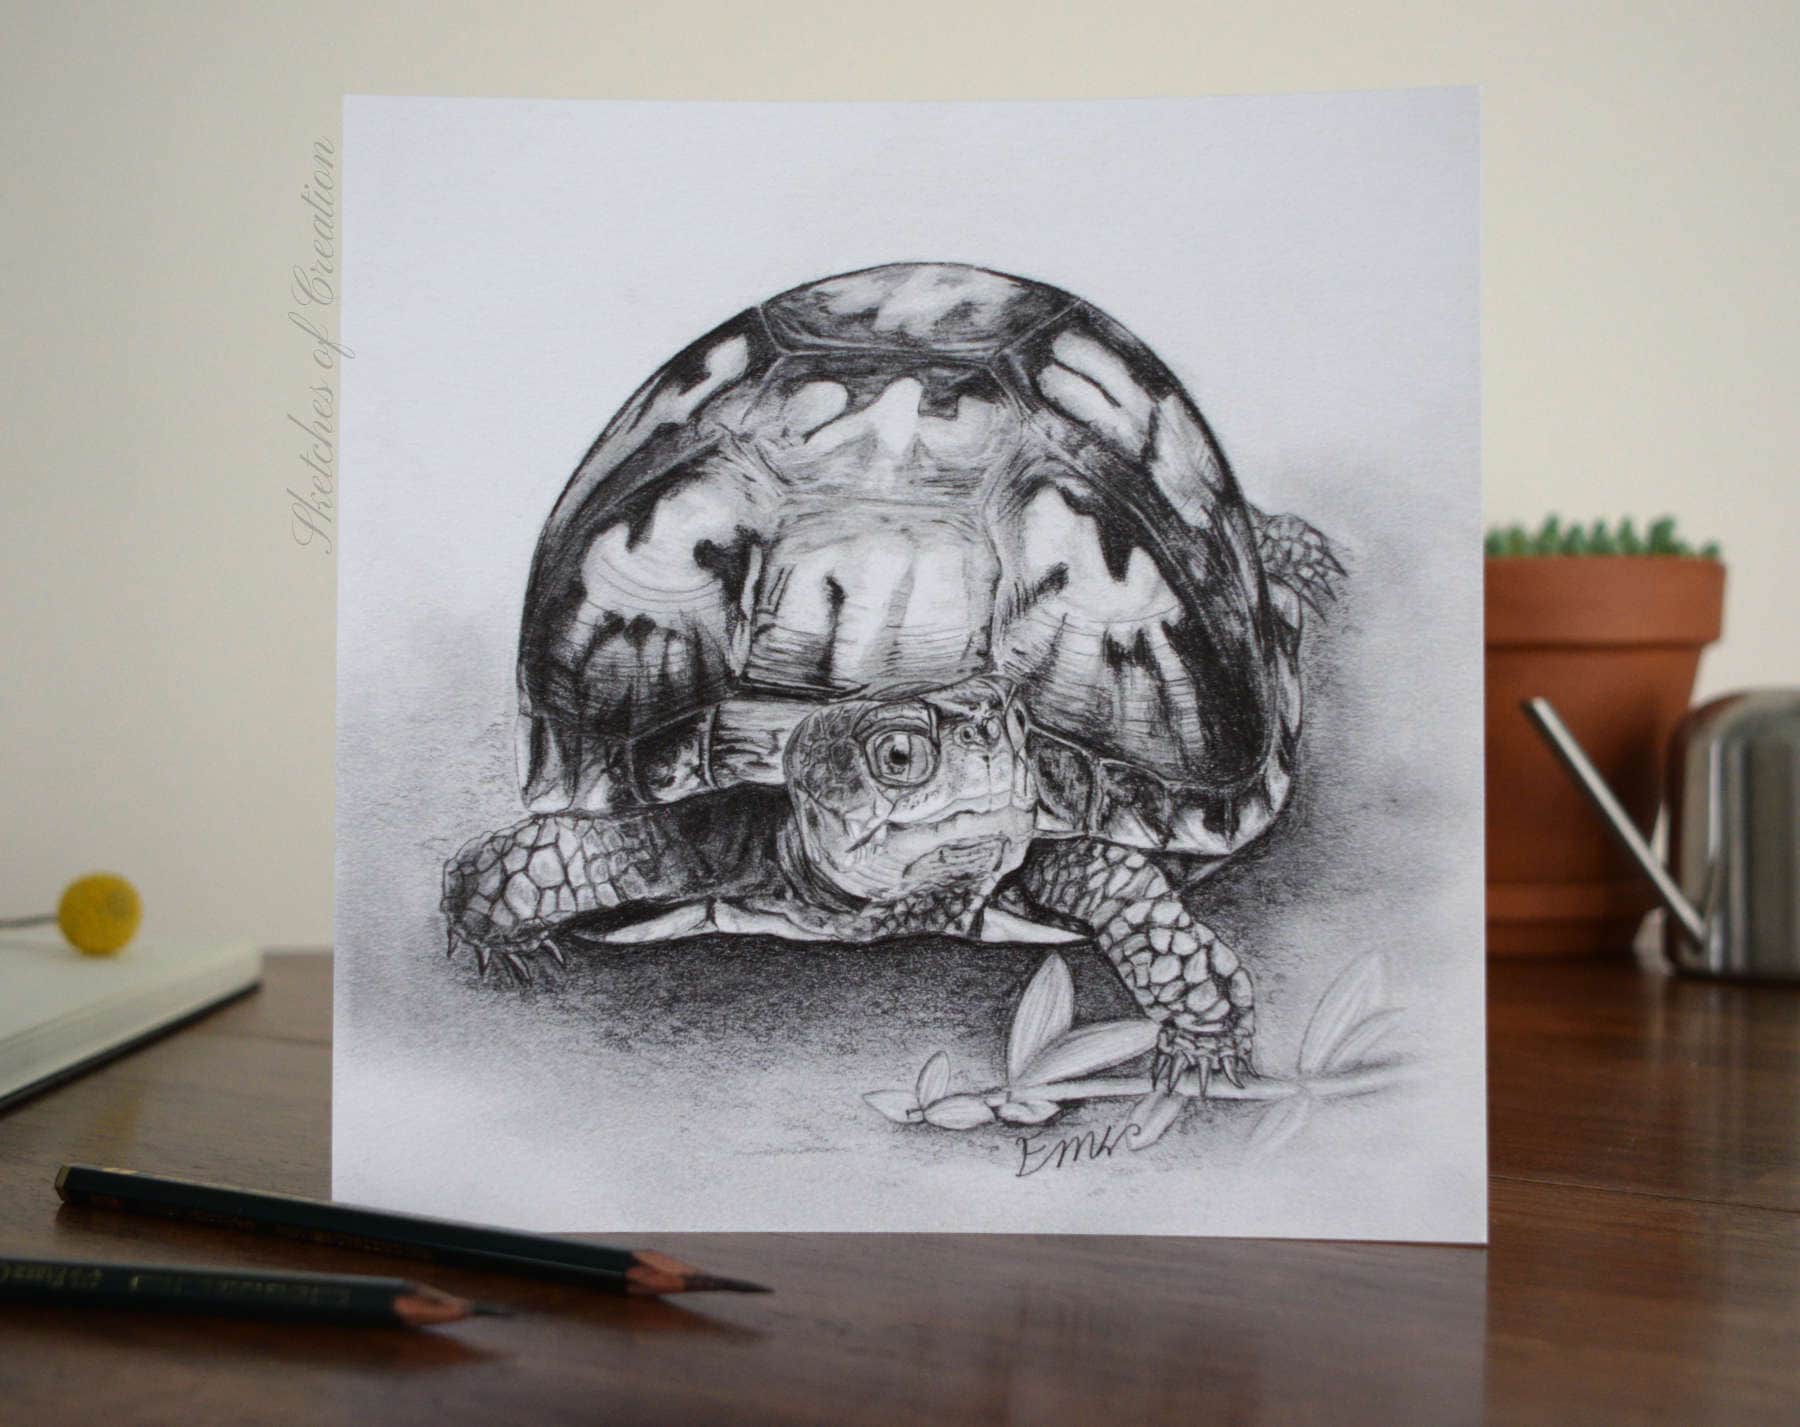 A print of a box turtle